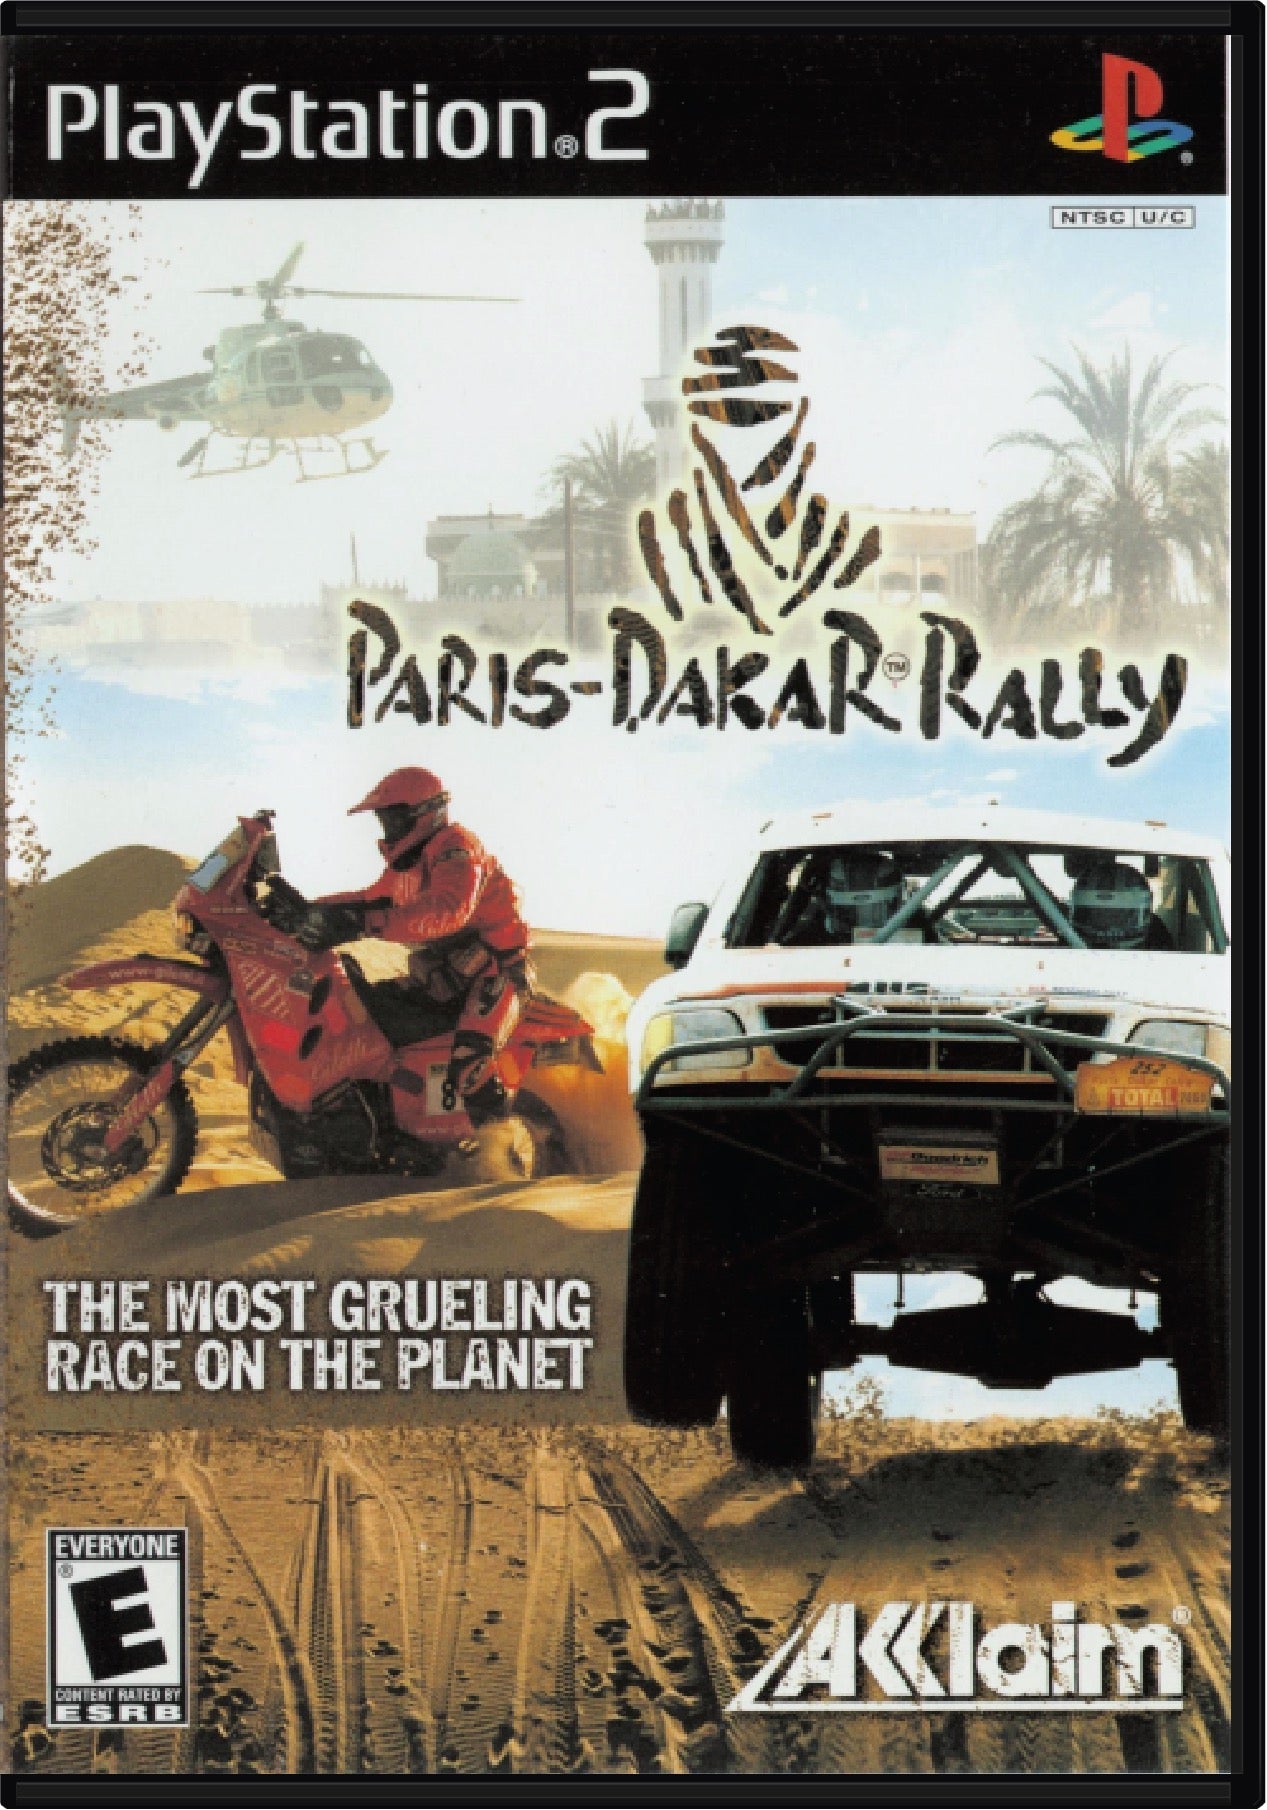 Paris-Dakar Rally Cover Art and Product Photo